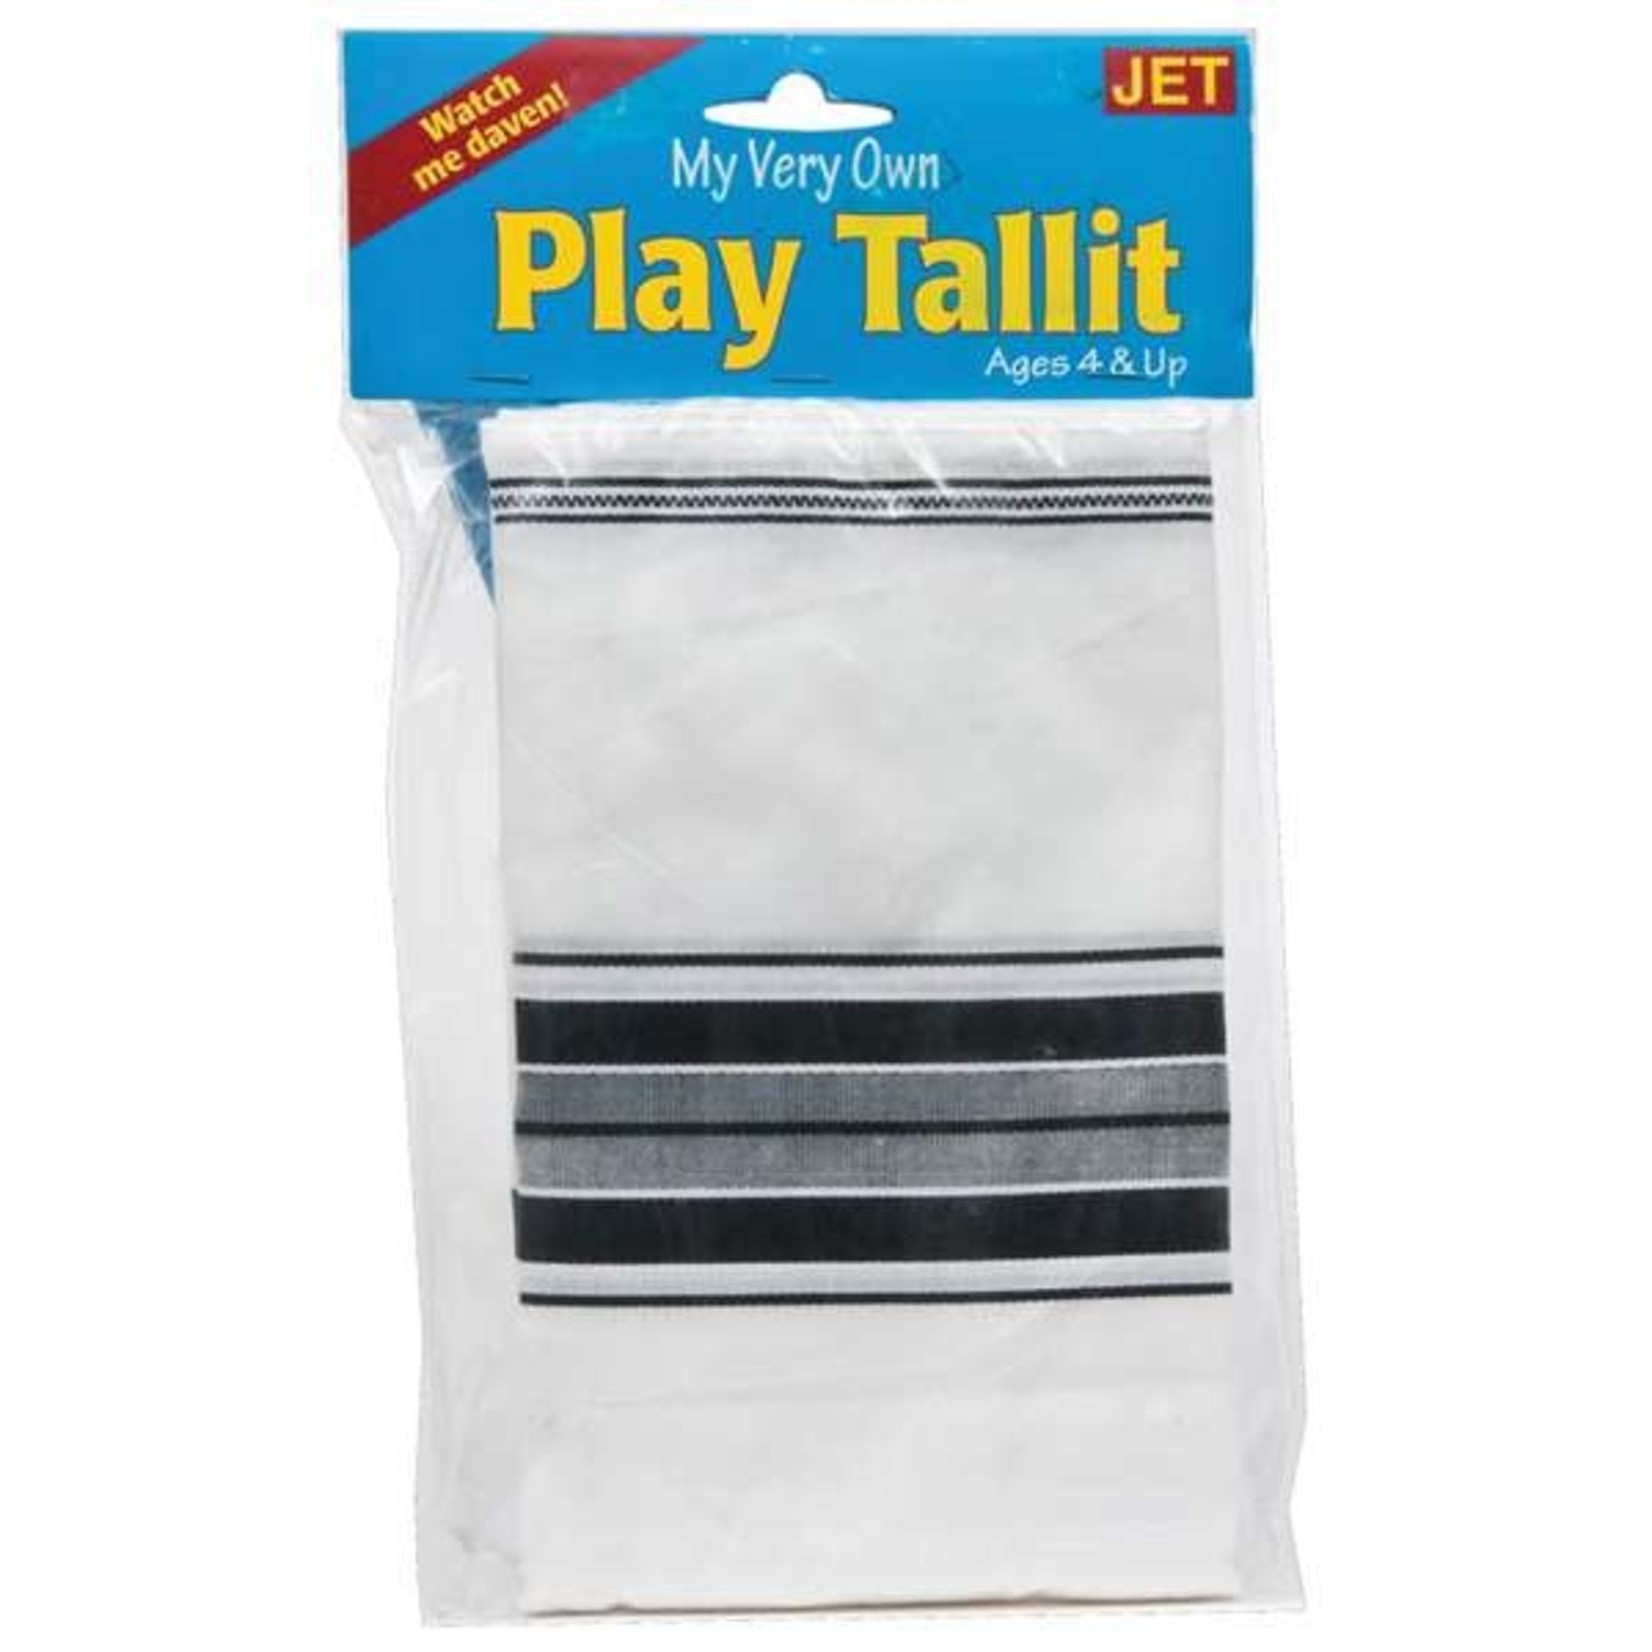 Play Talit